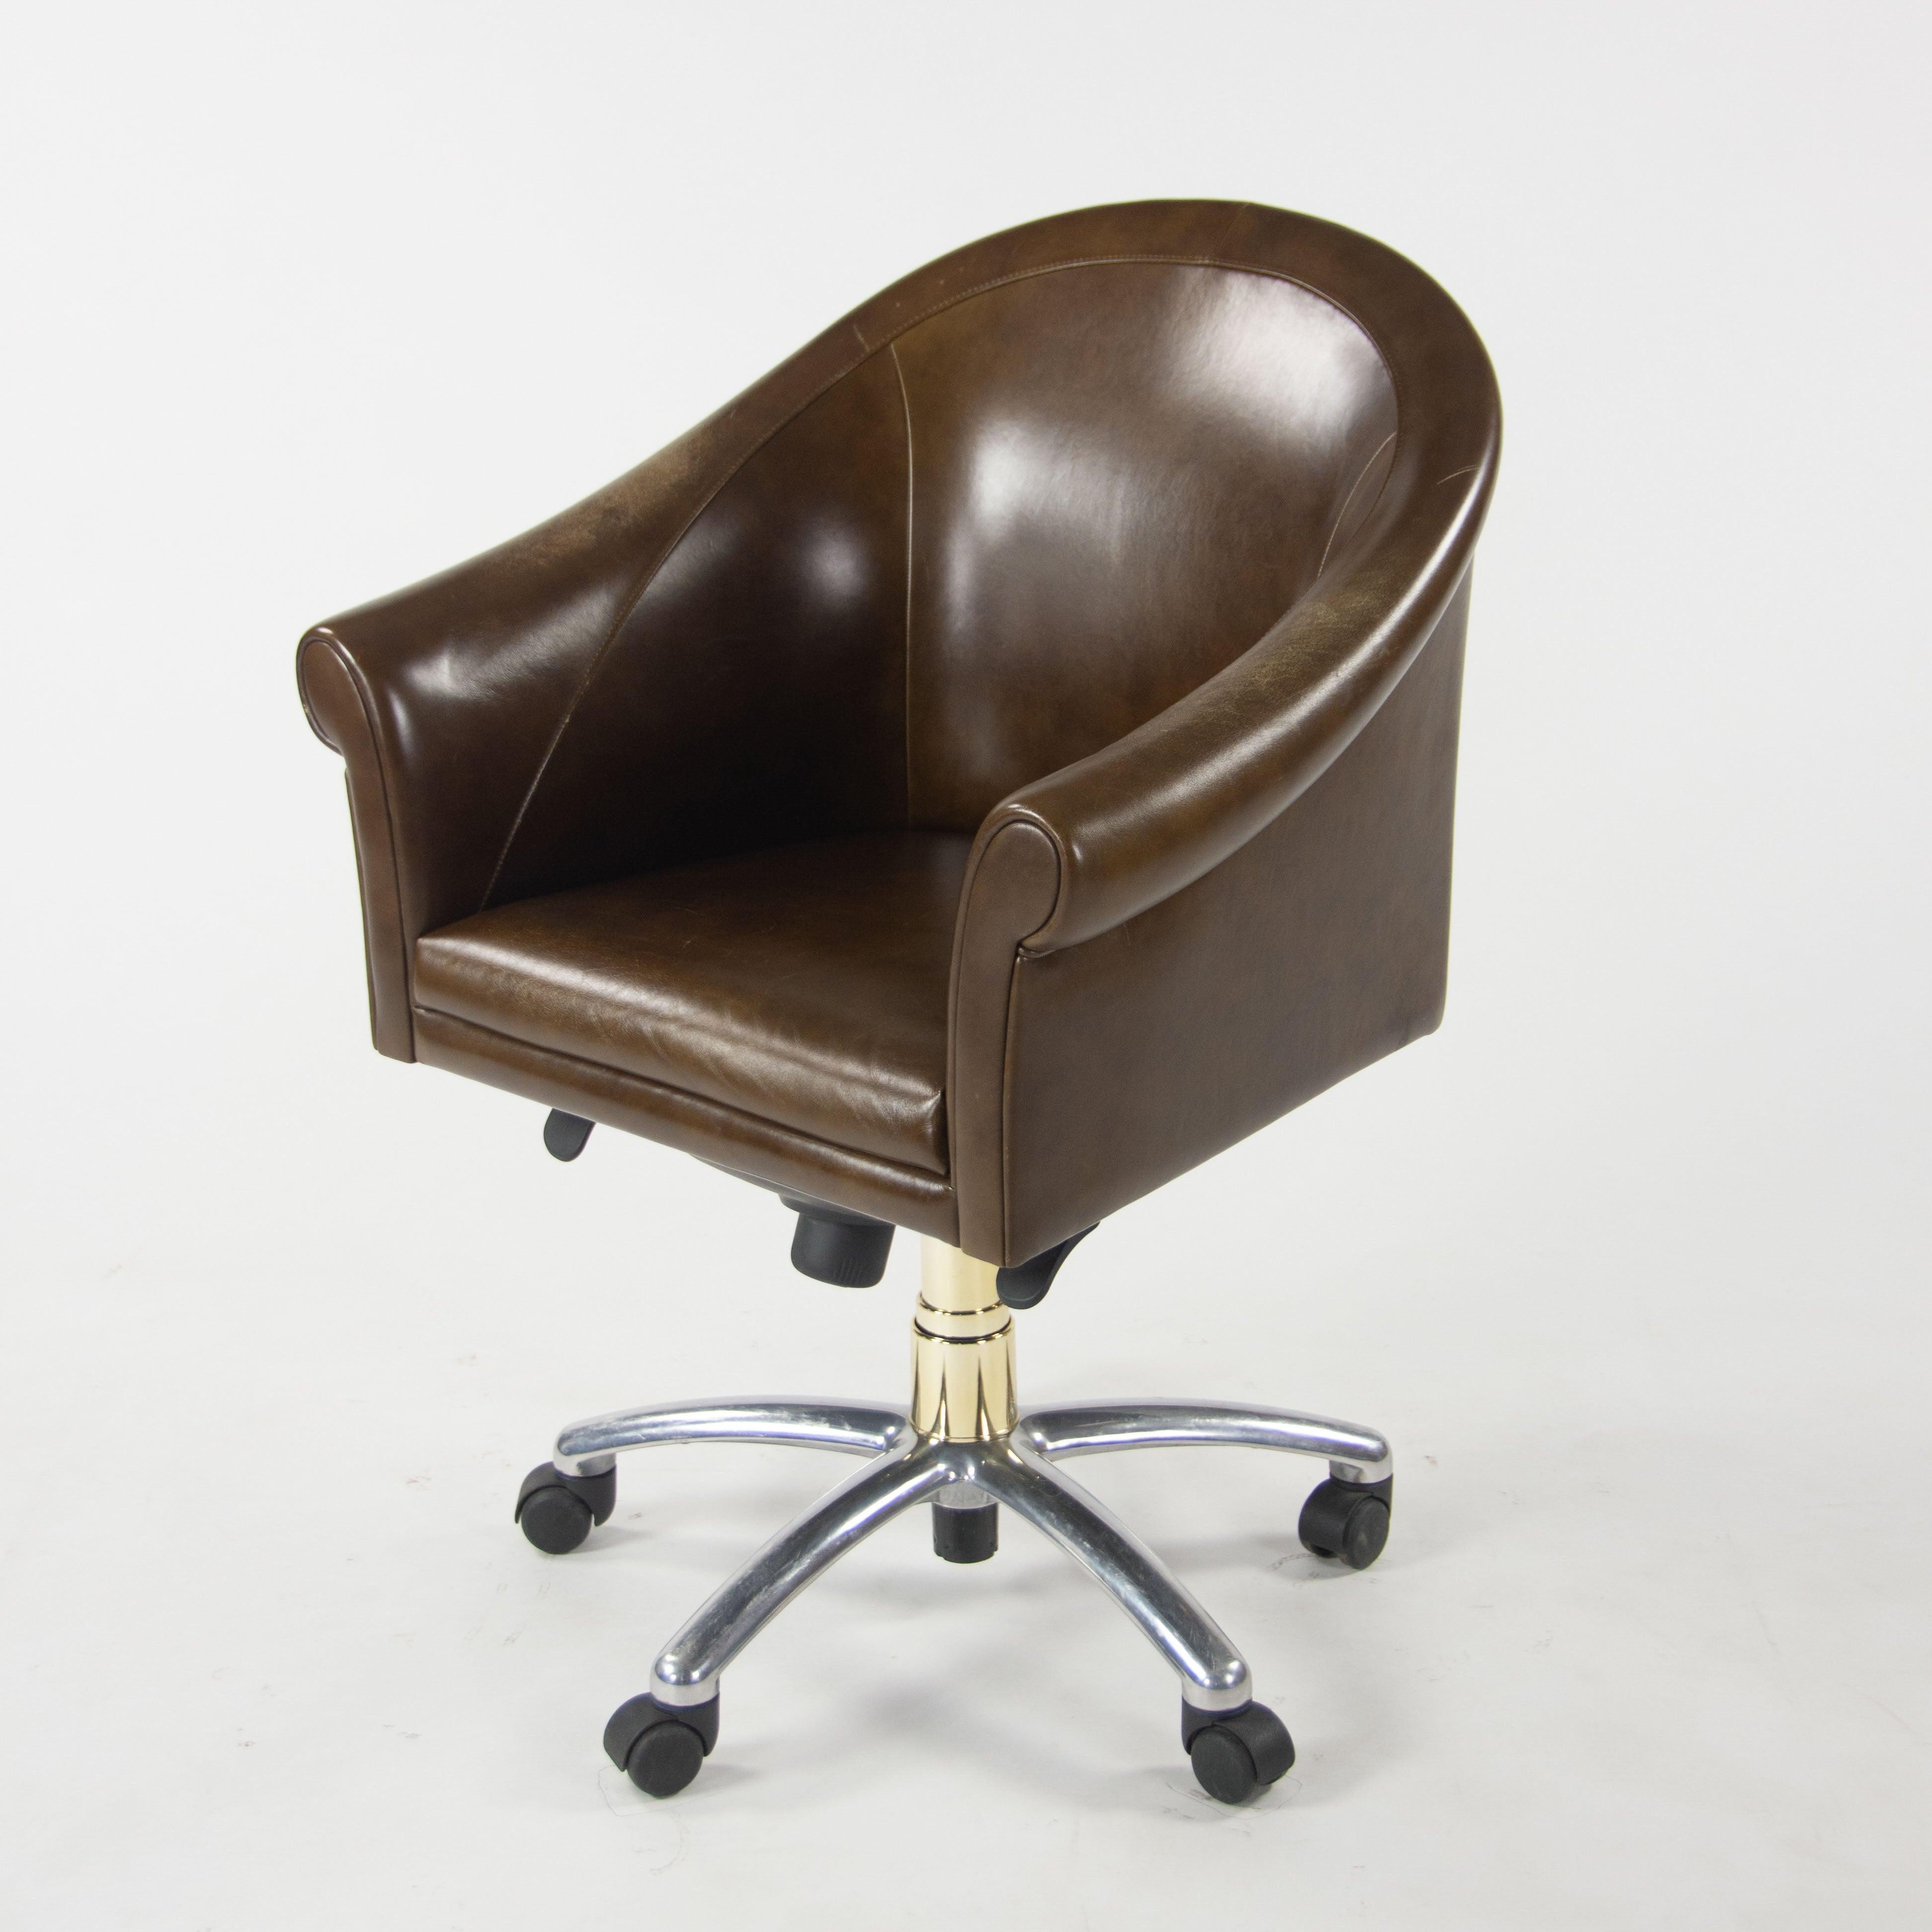 Poltrona Frau Brown Leather Luca Scacchetti Sinan Office Desk Chair For Sale 2